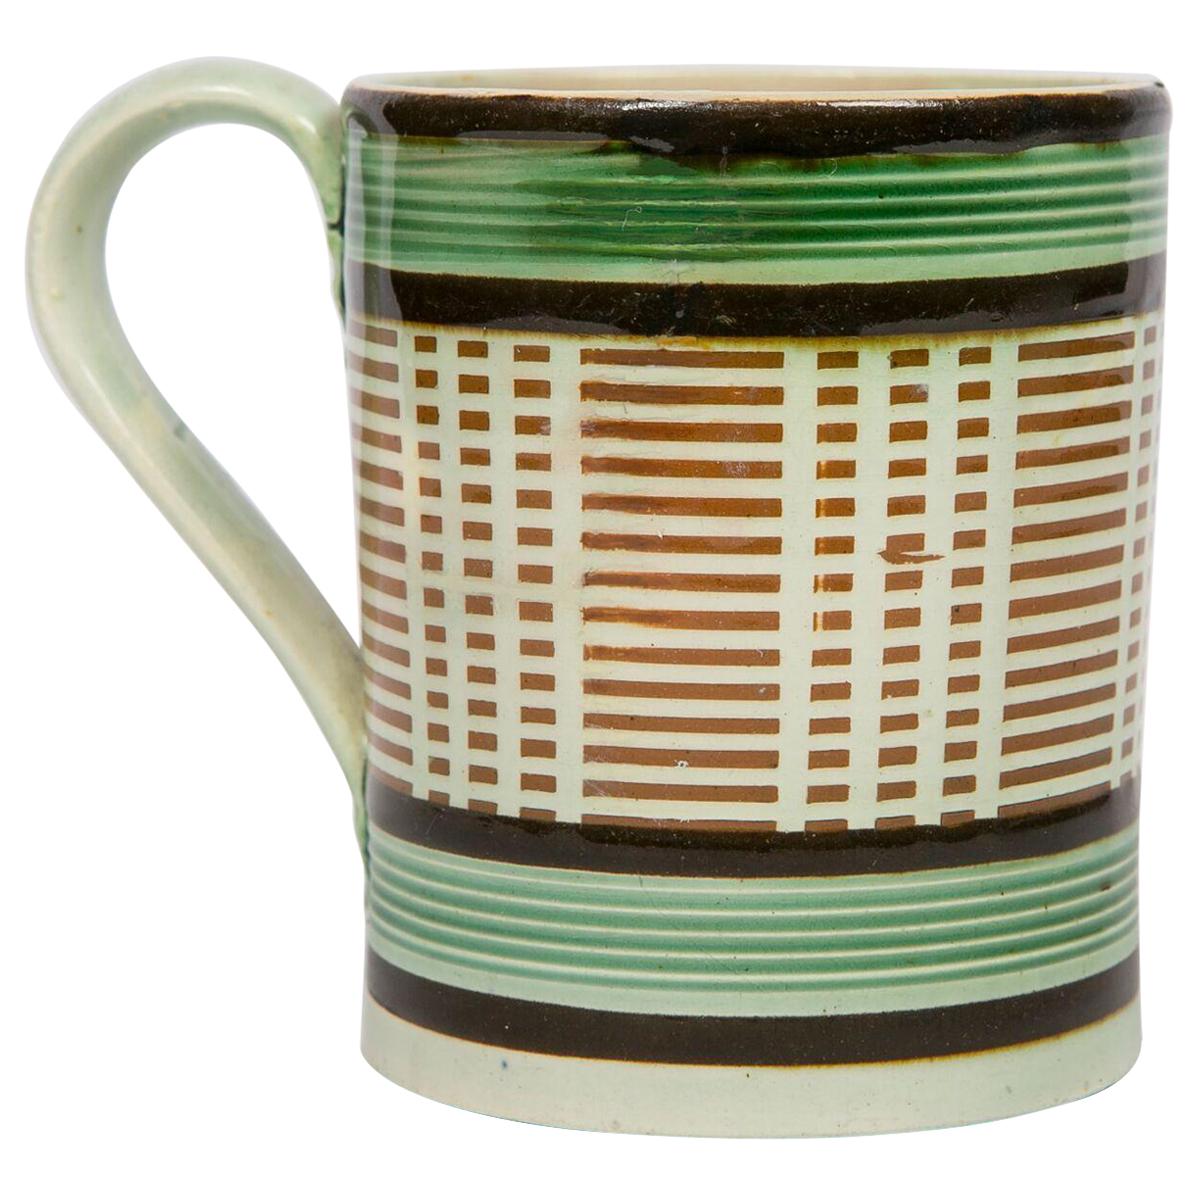 Mochaware Mug with a Geometric Pattern, England, circa 1815